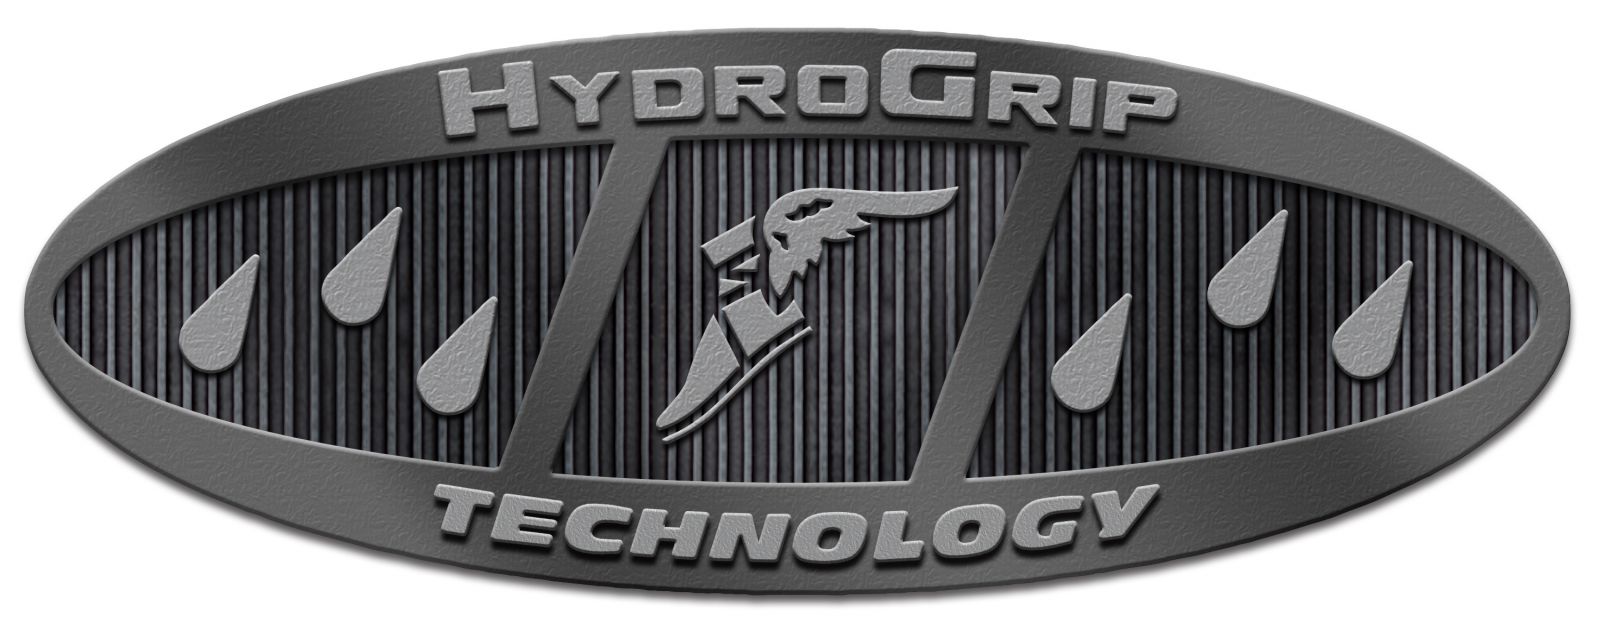 HydroGrip_Technology